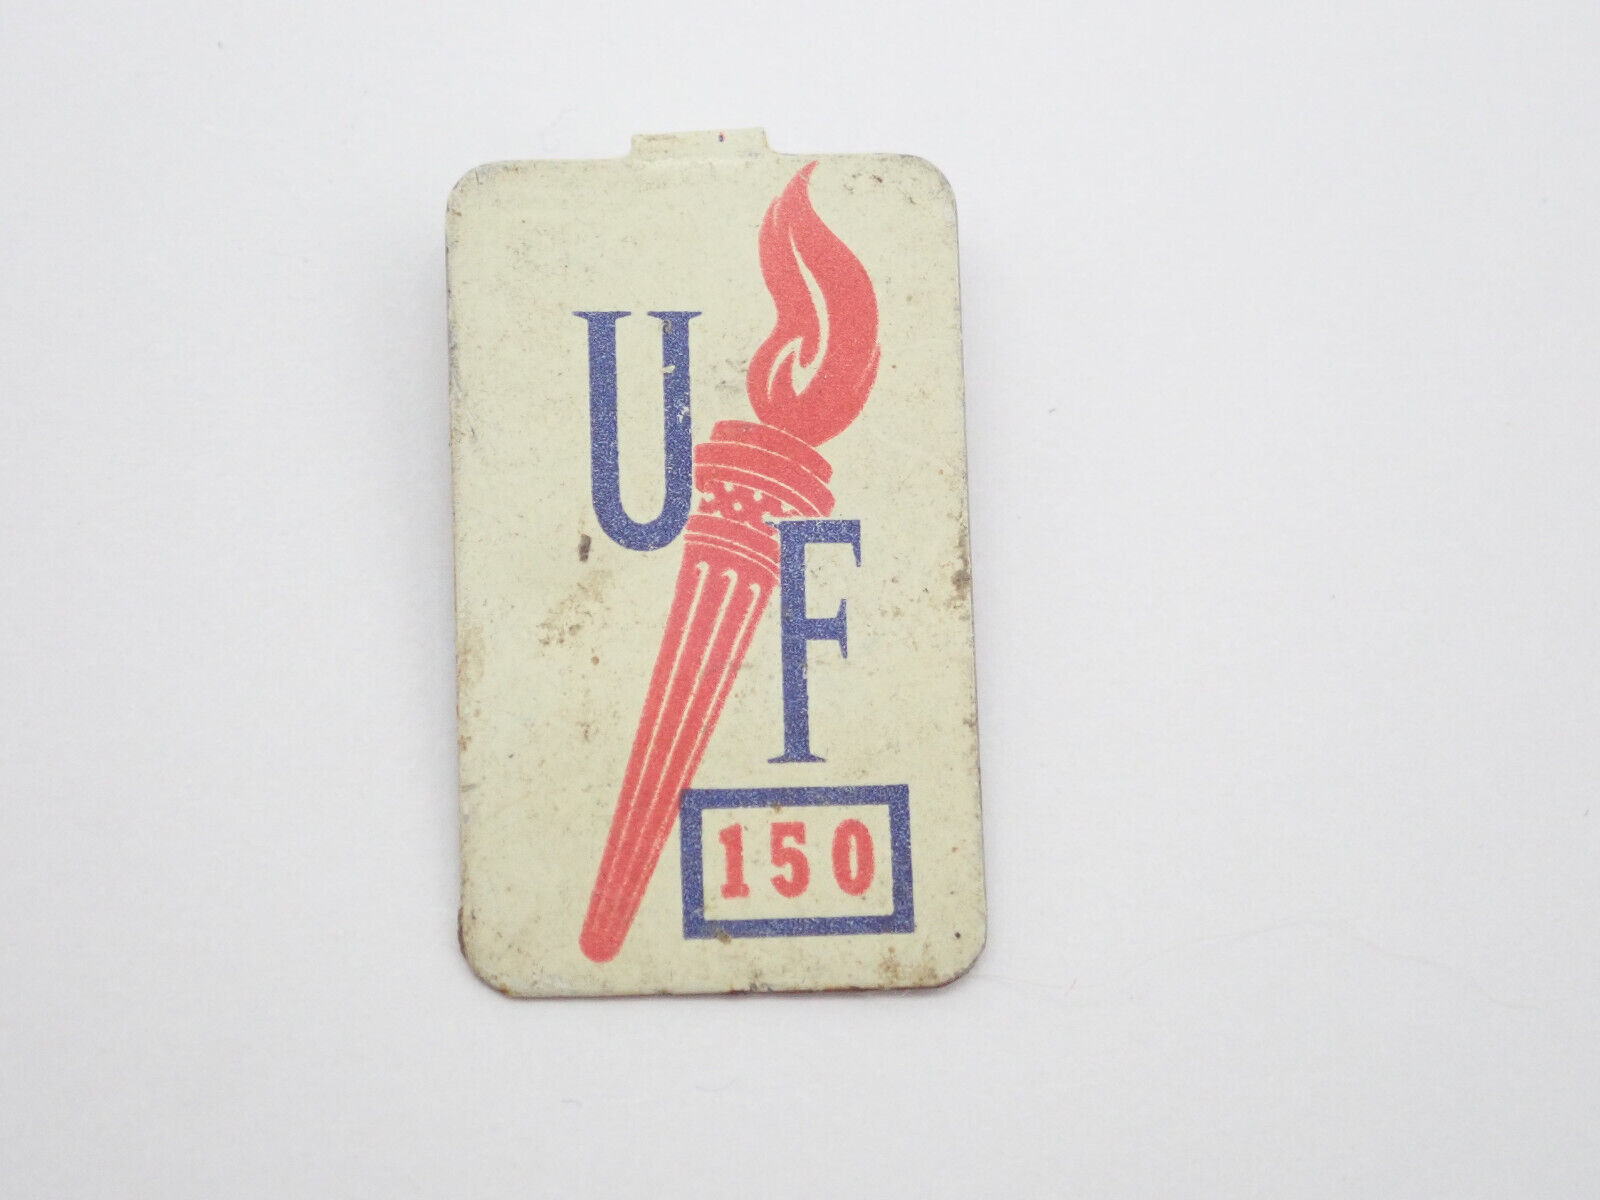 UF Torch 150 Vintage Lapel Pin